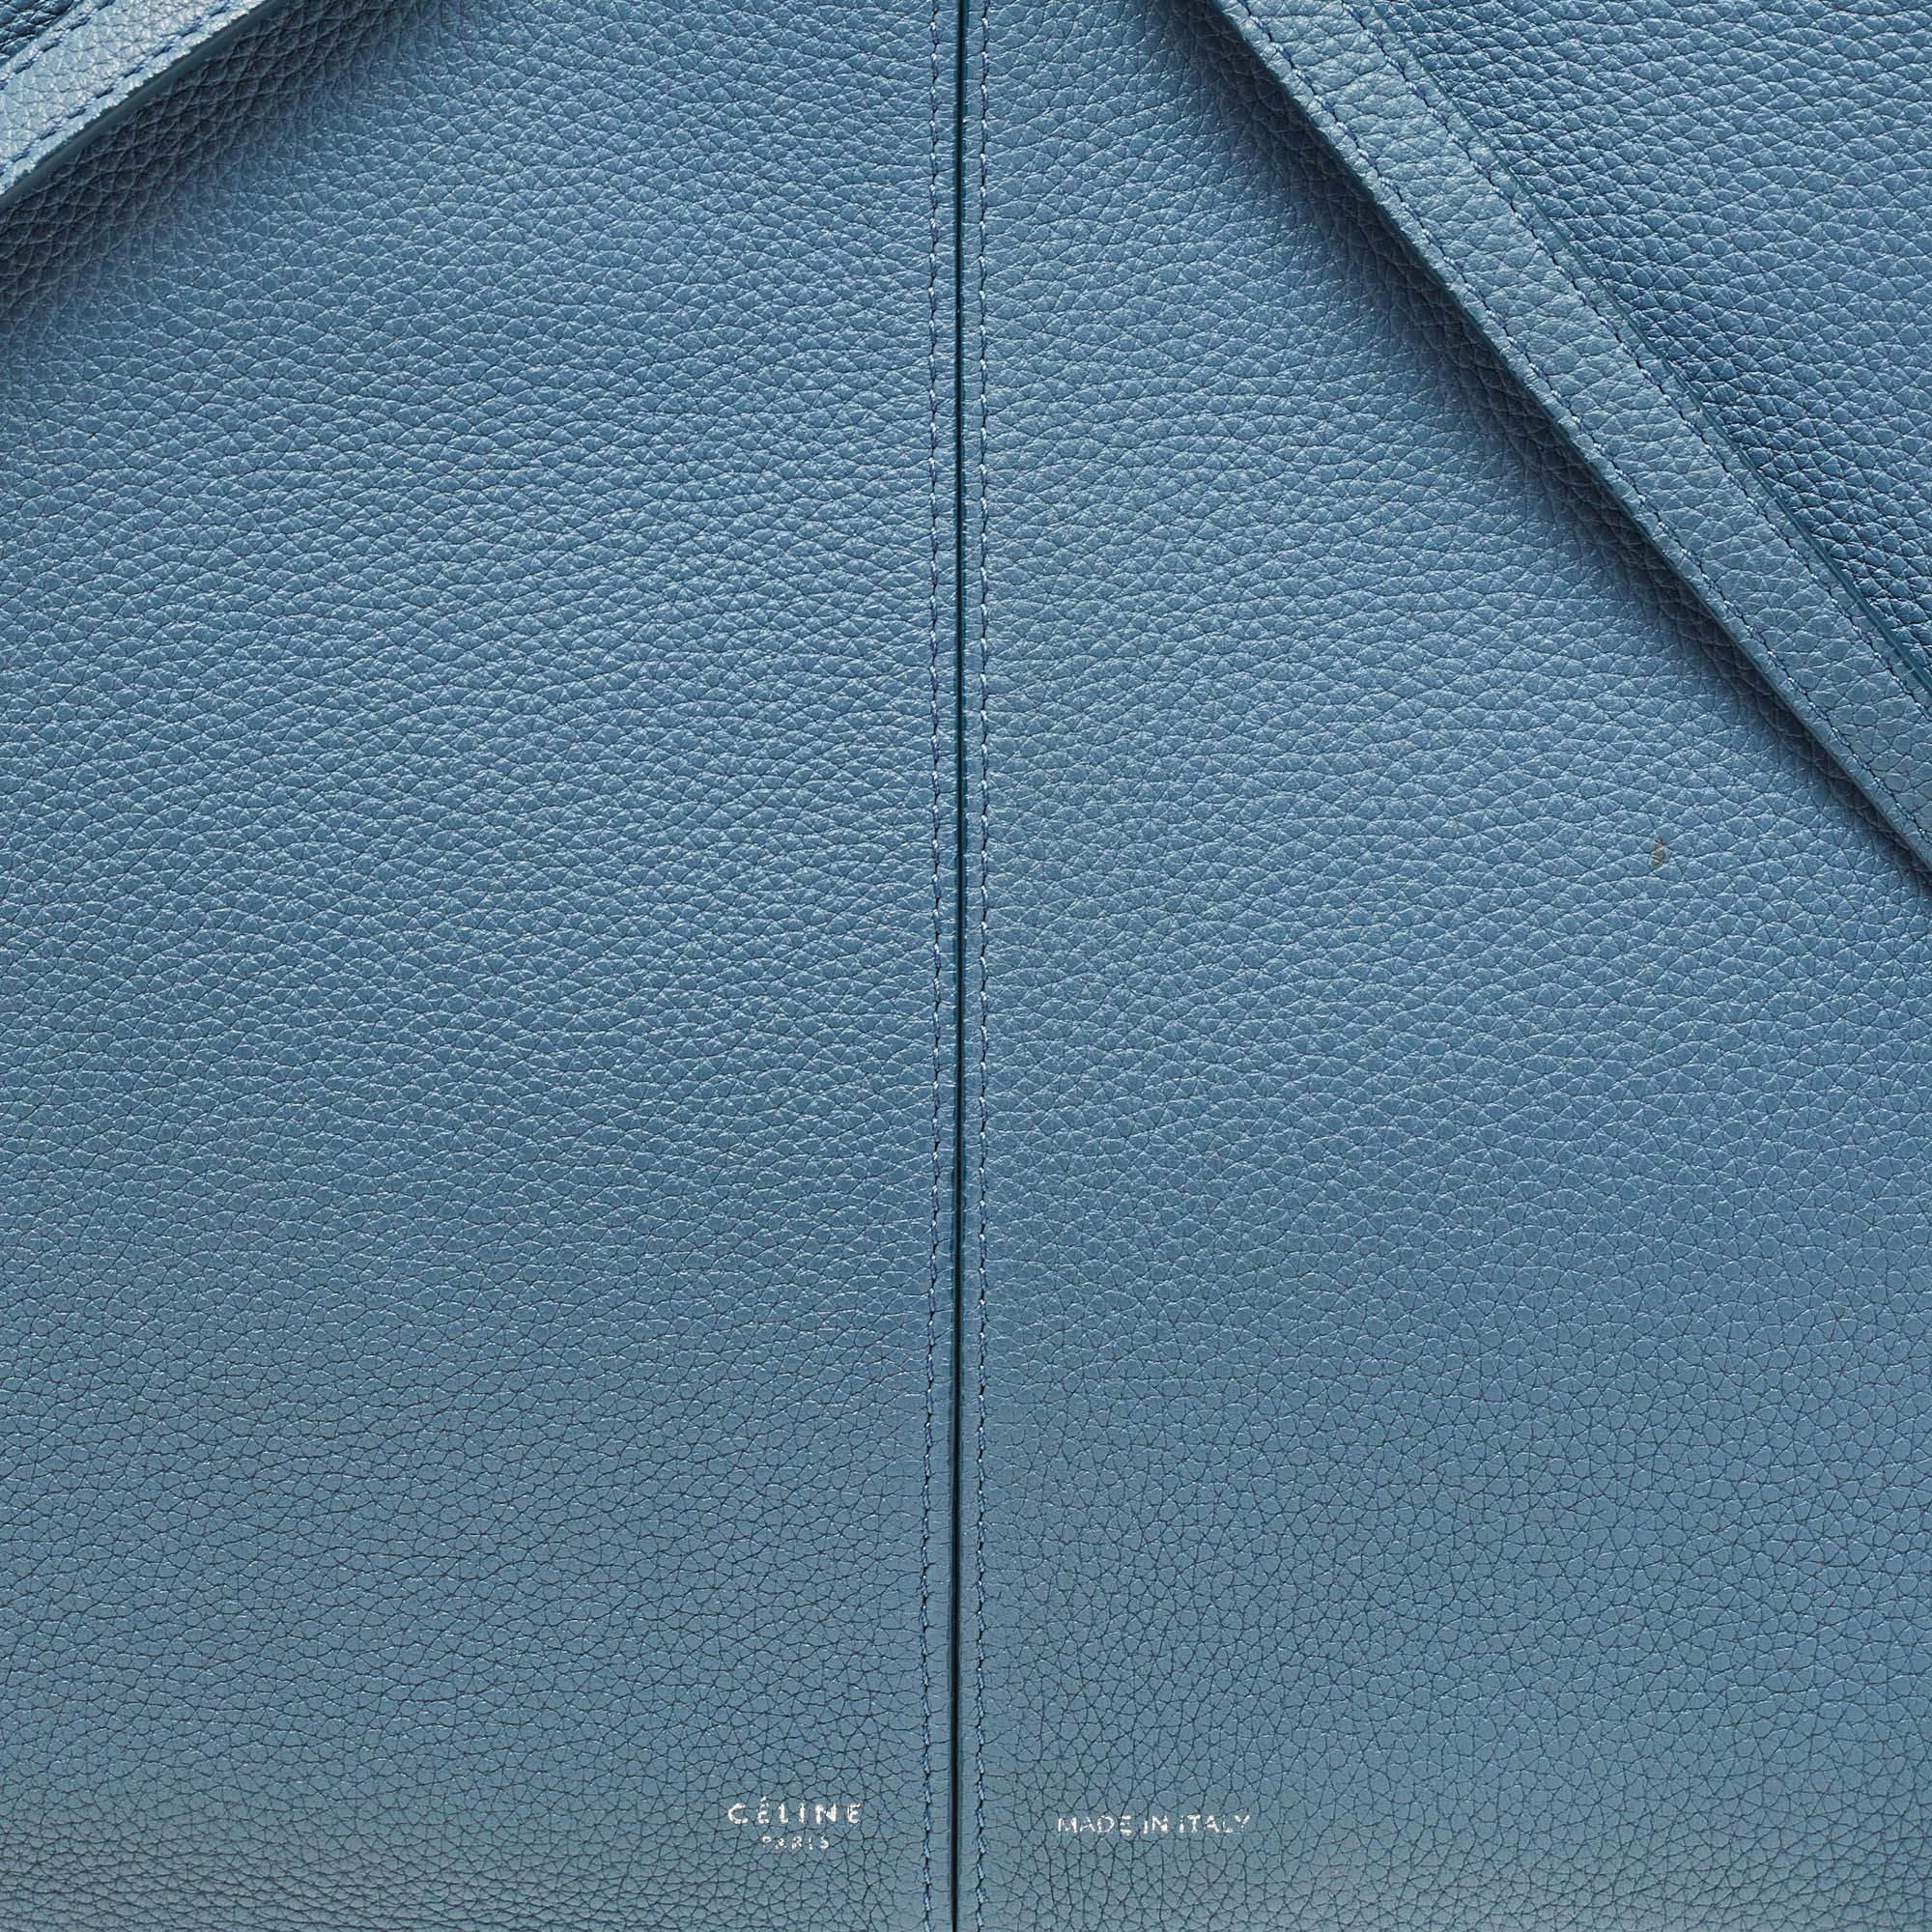 Celine Blue Leather Small Tri-Fold Tote 7